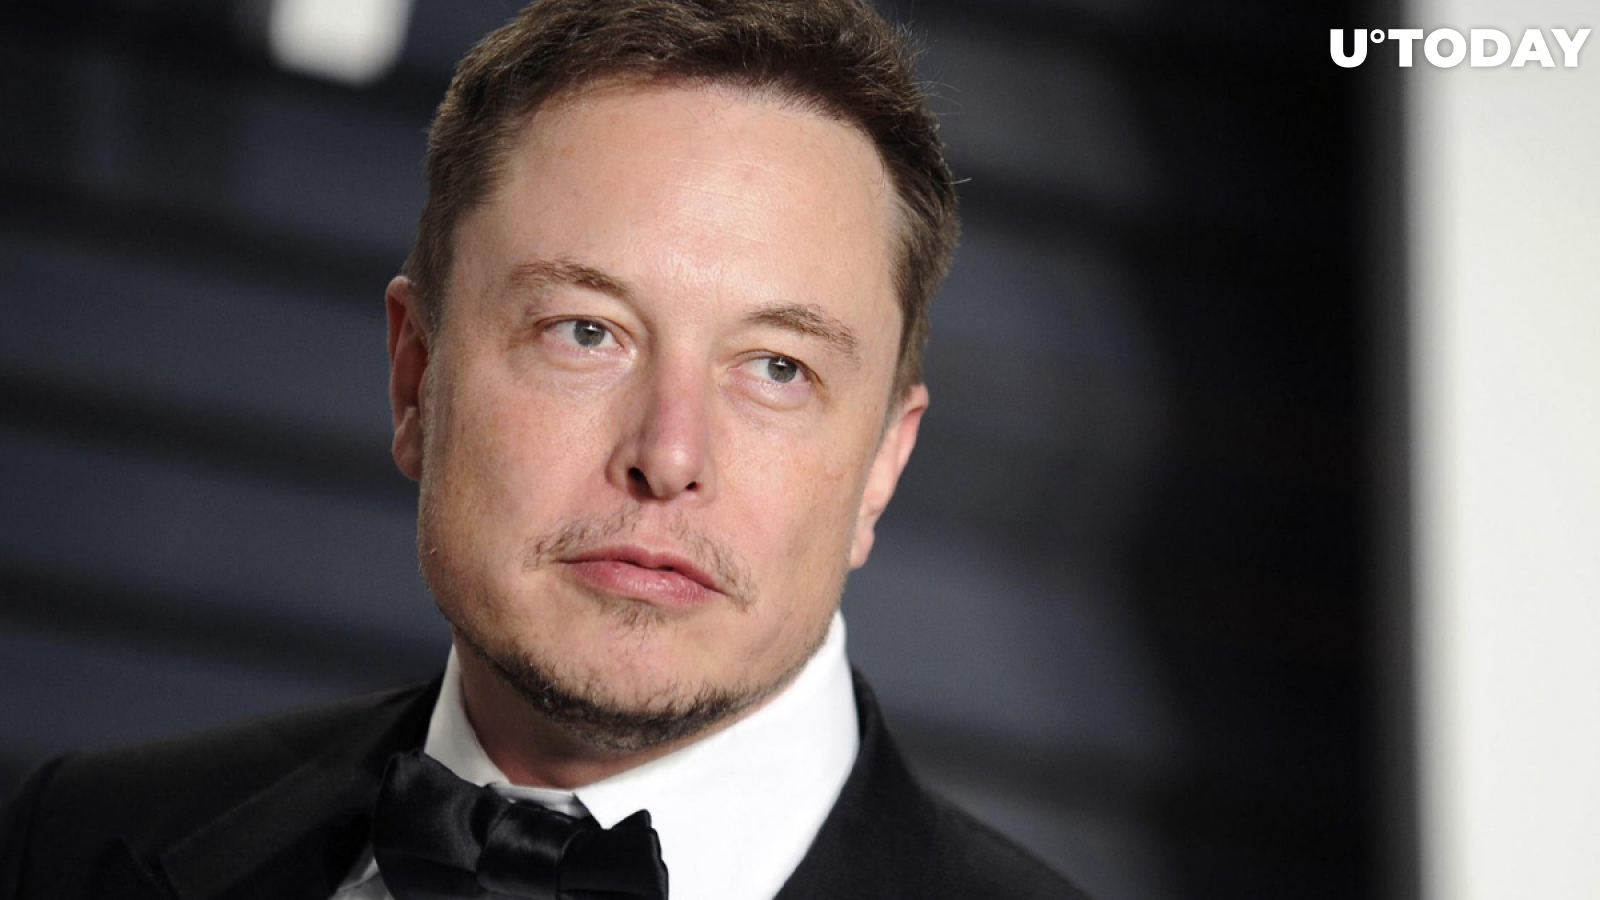 Elon Musk Shills DOGE with Tesla’s DOJO Supercomputer, Dogecoin Up 7%